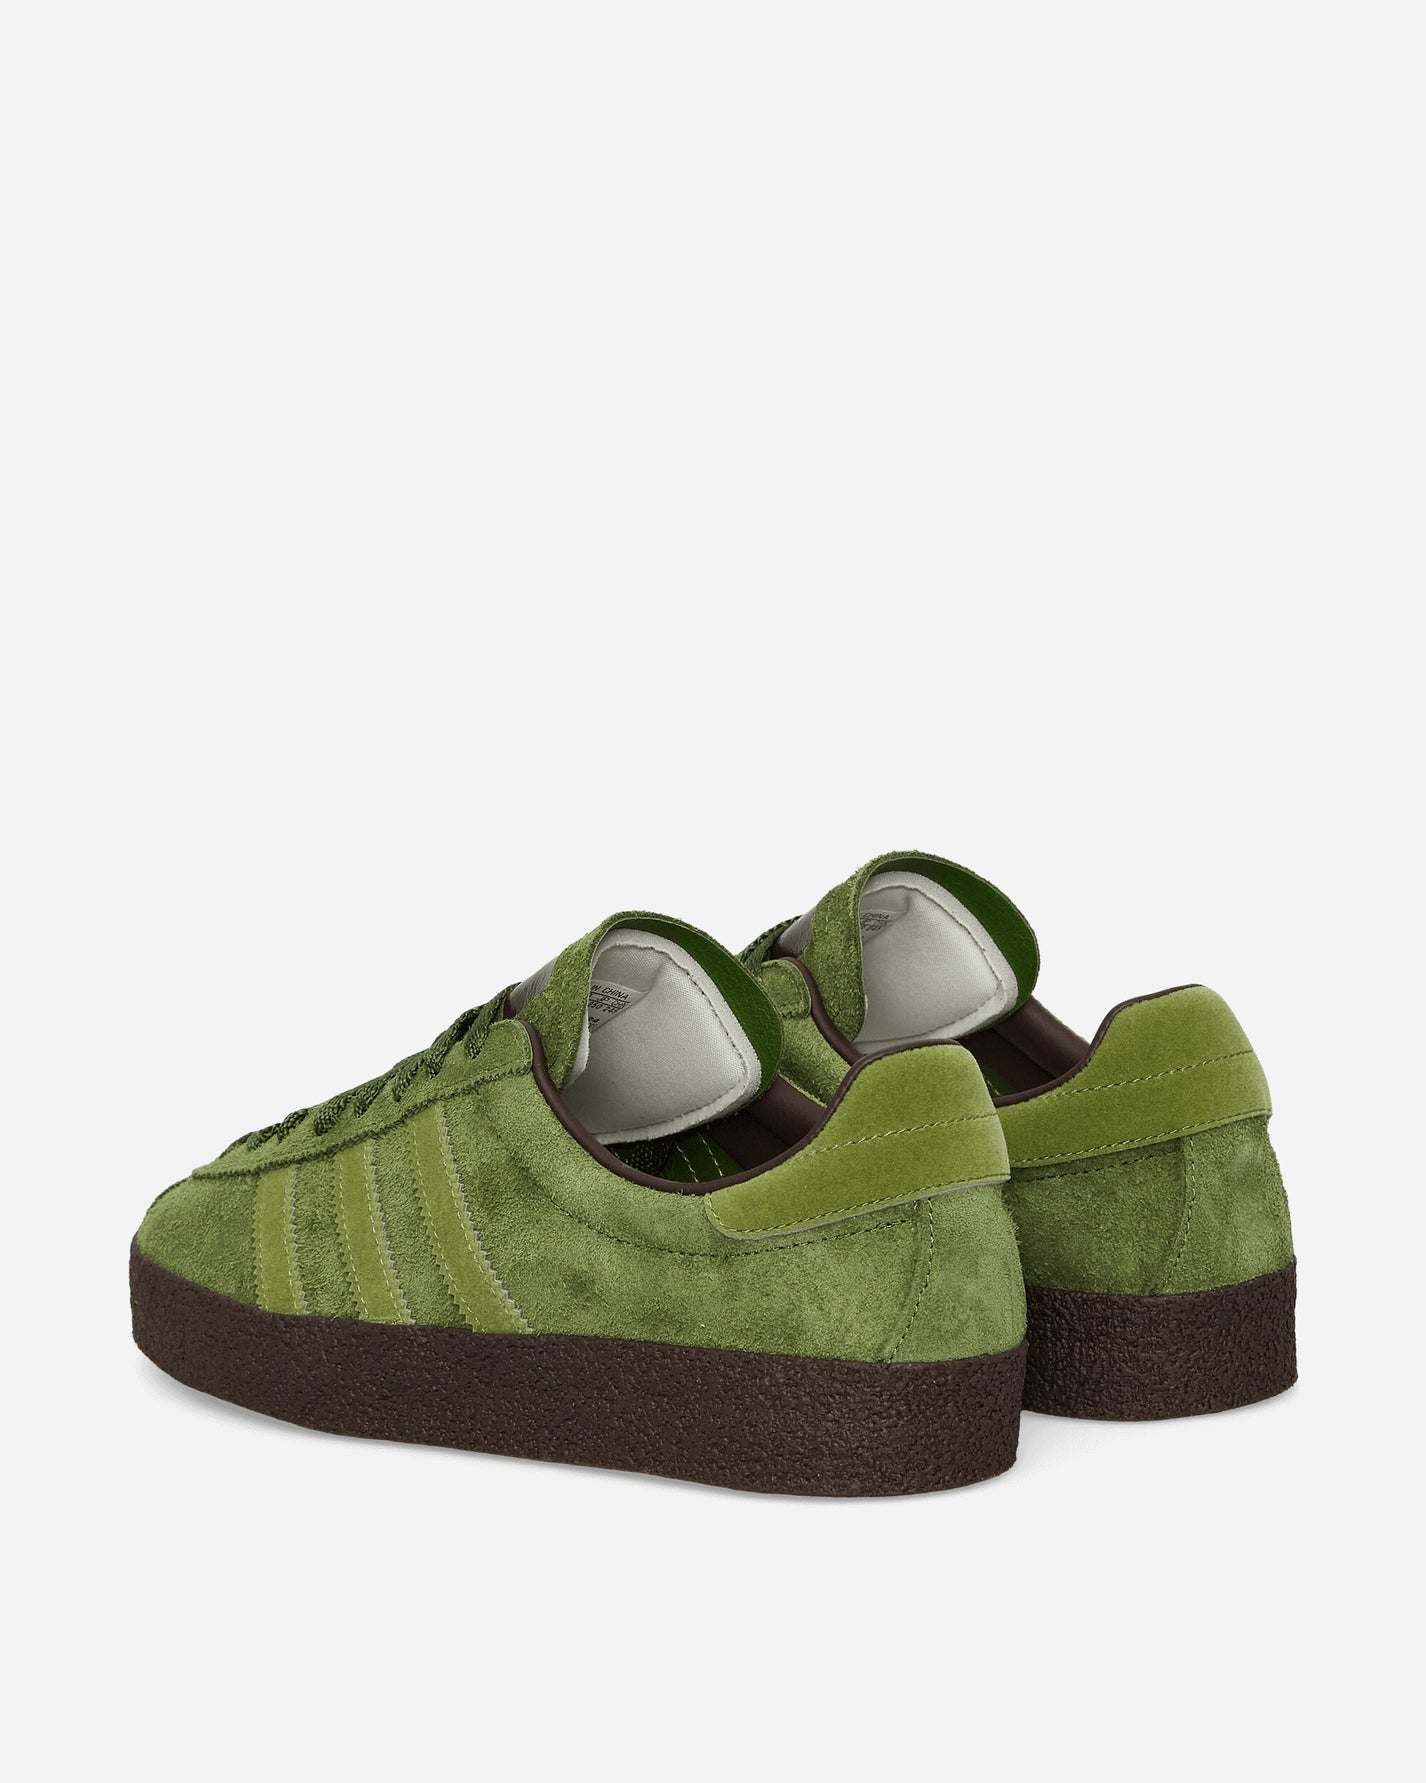 adidas Ardwick Spzl Craft Green/Tech Olive Sneakers Low IH2146